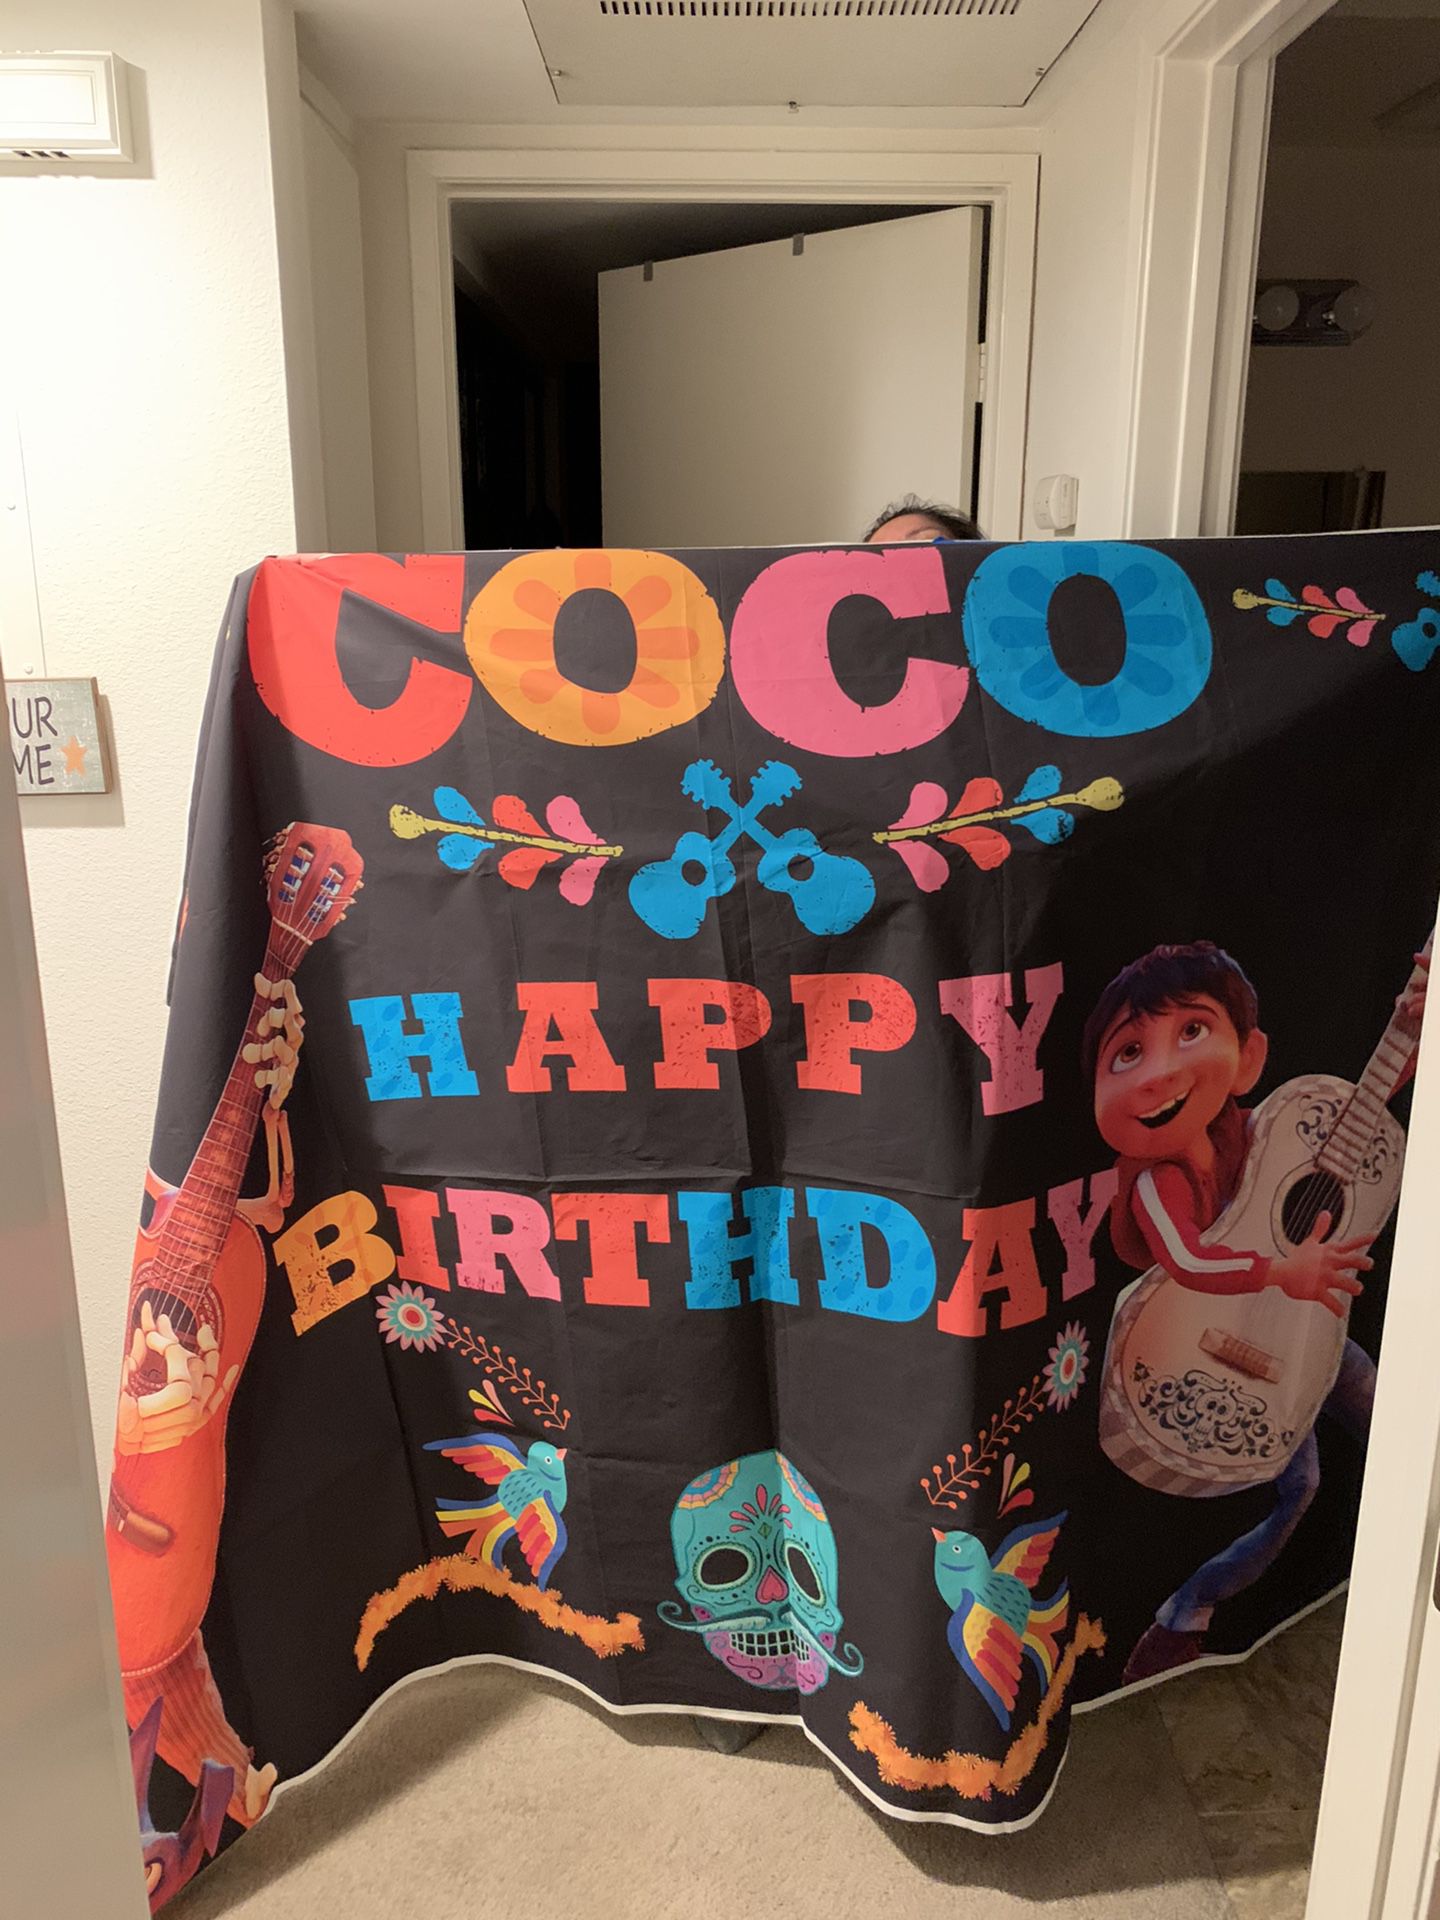 Coco Happy Birthday banner